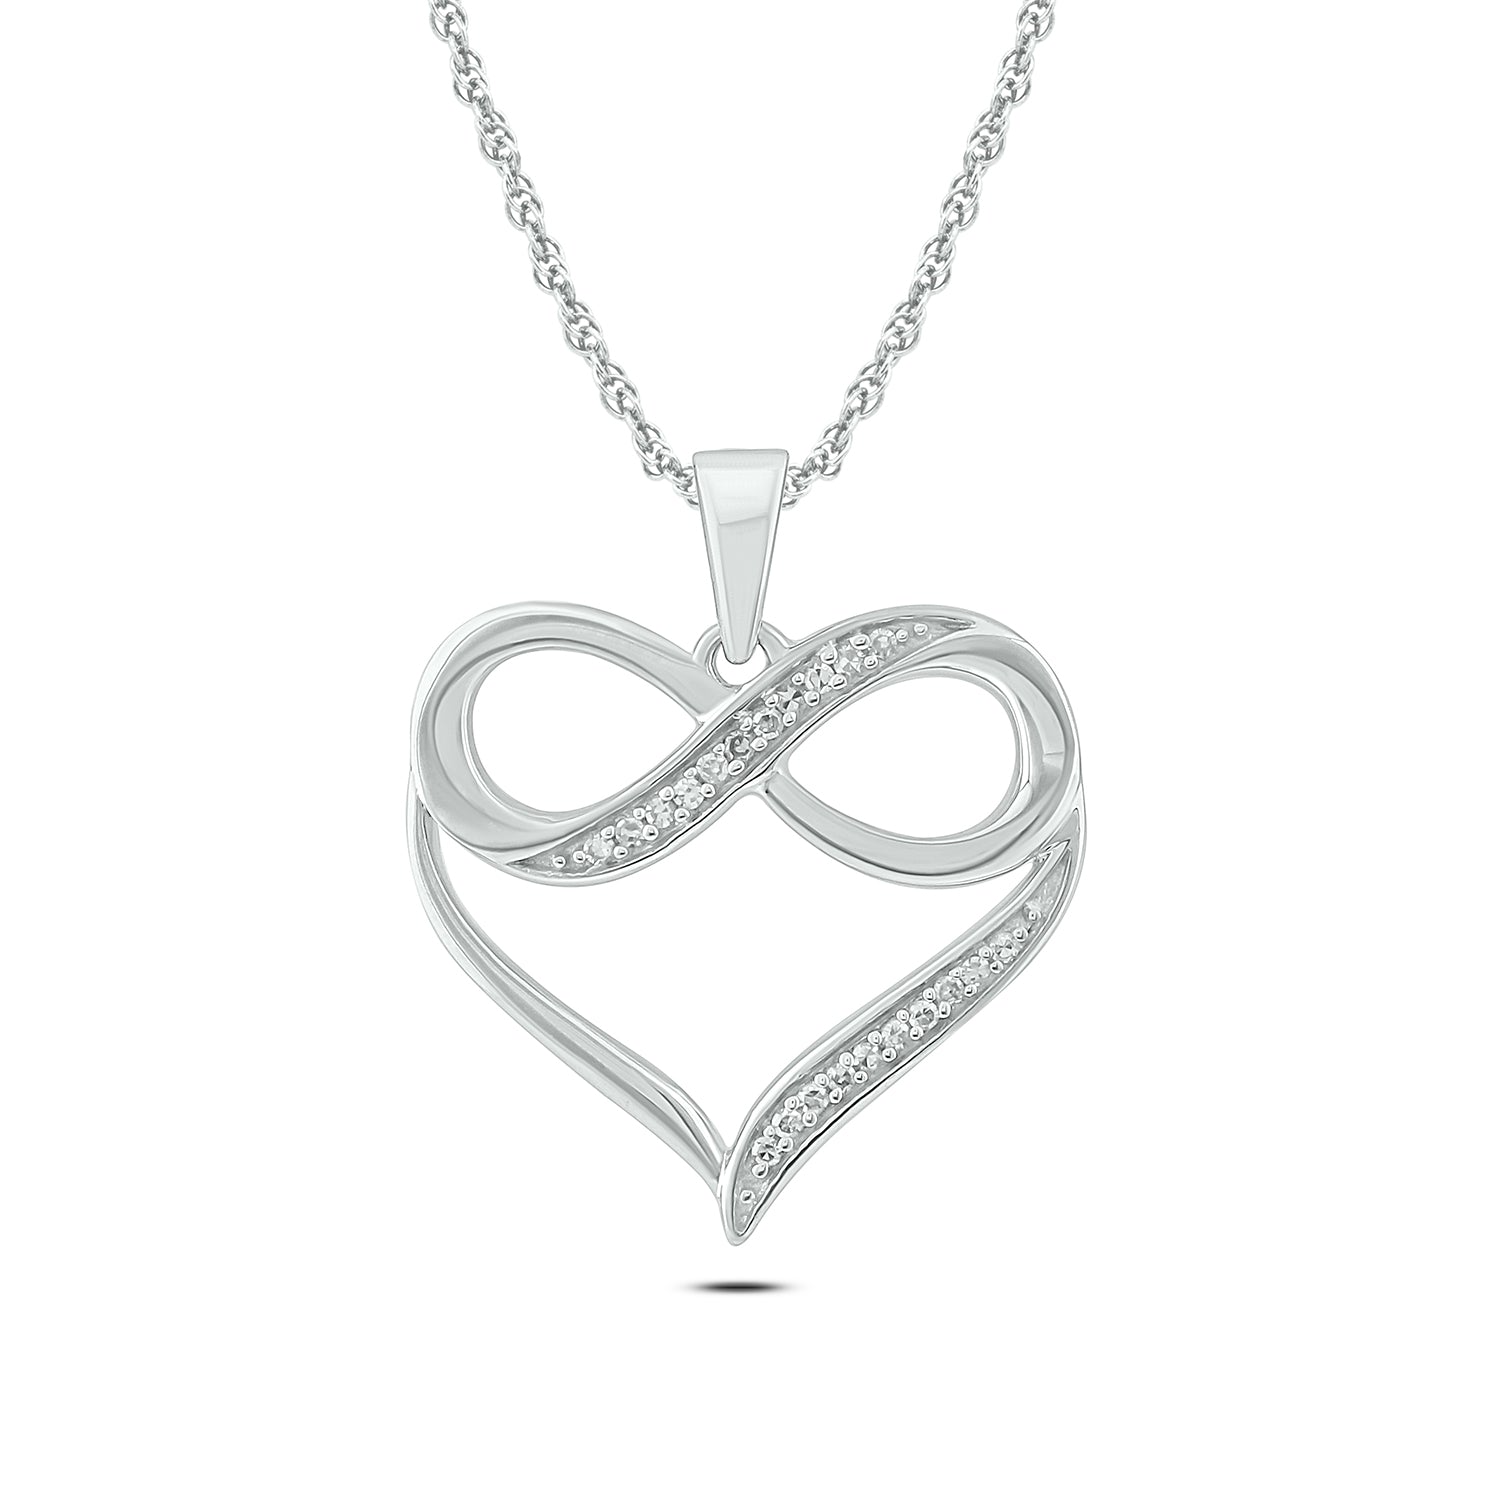 Helzberg Diamonds Necklaces for Women - Poshmark